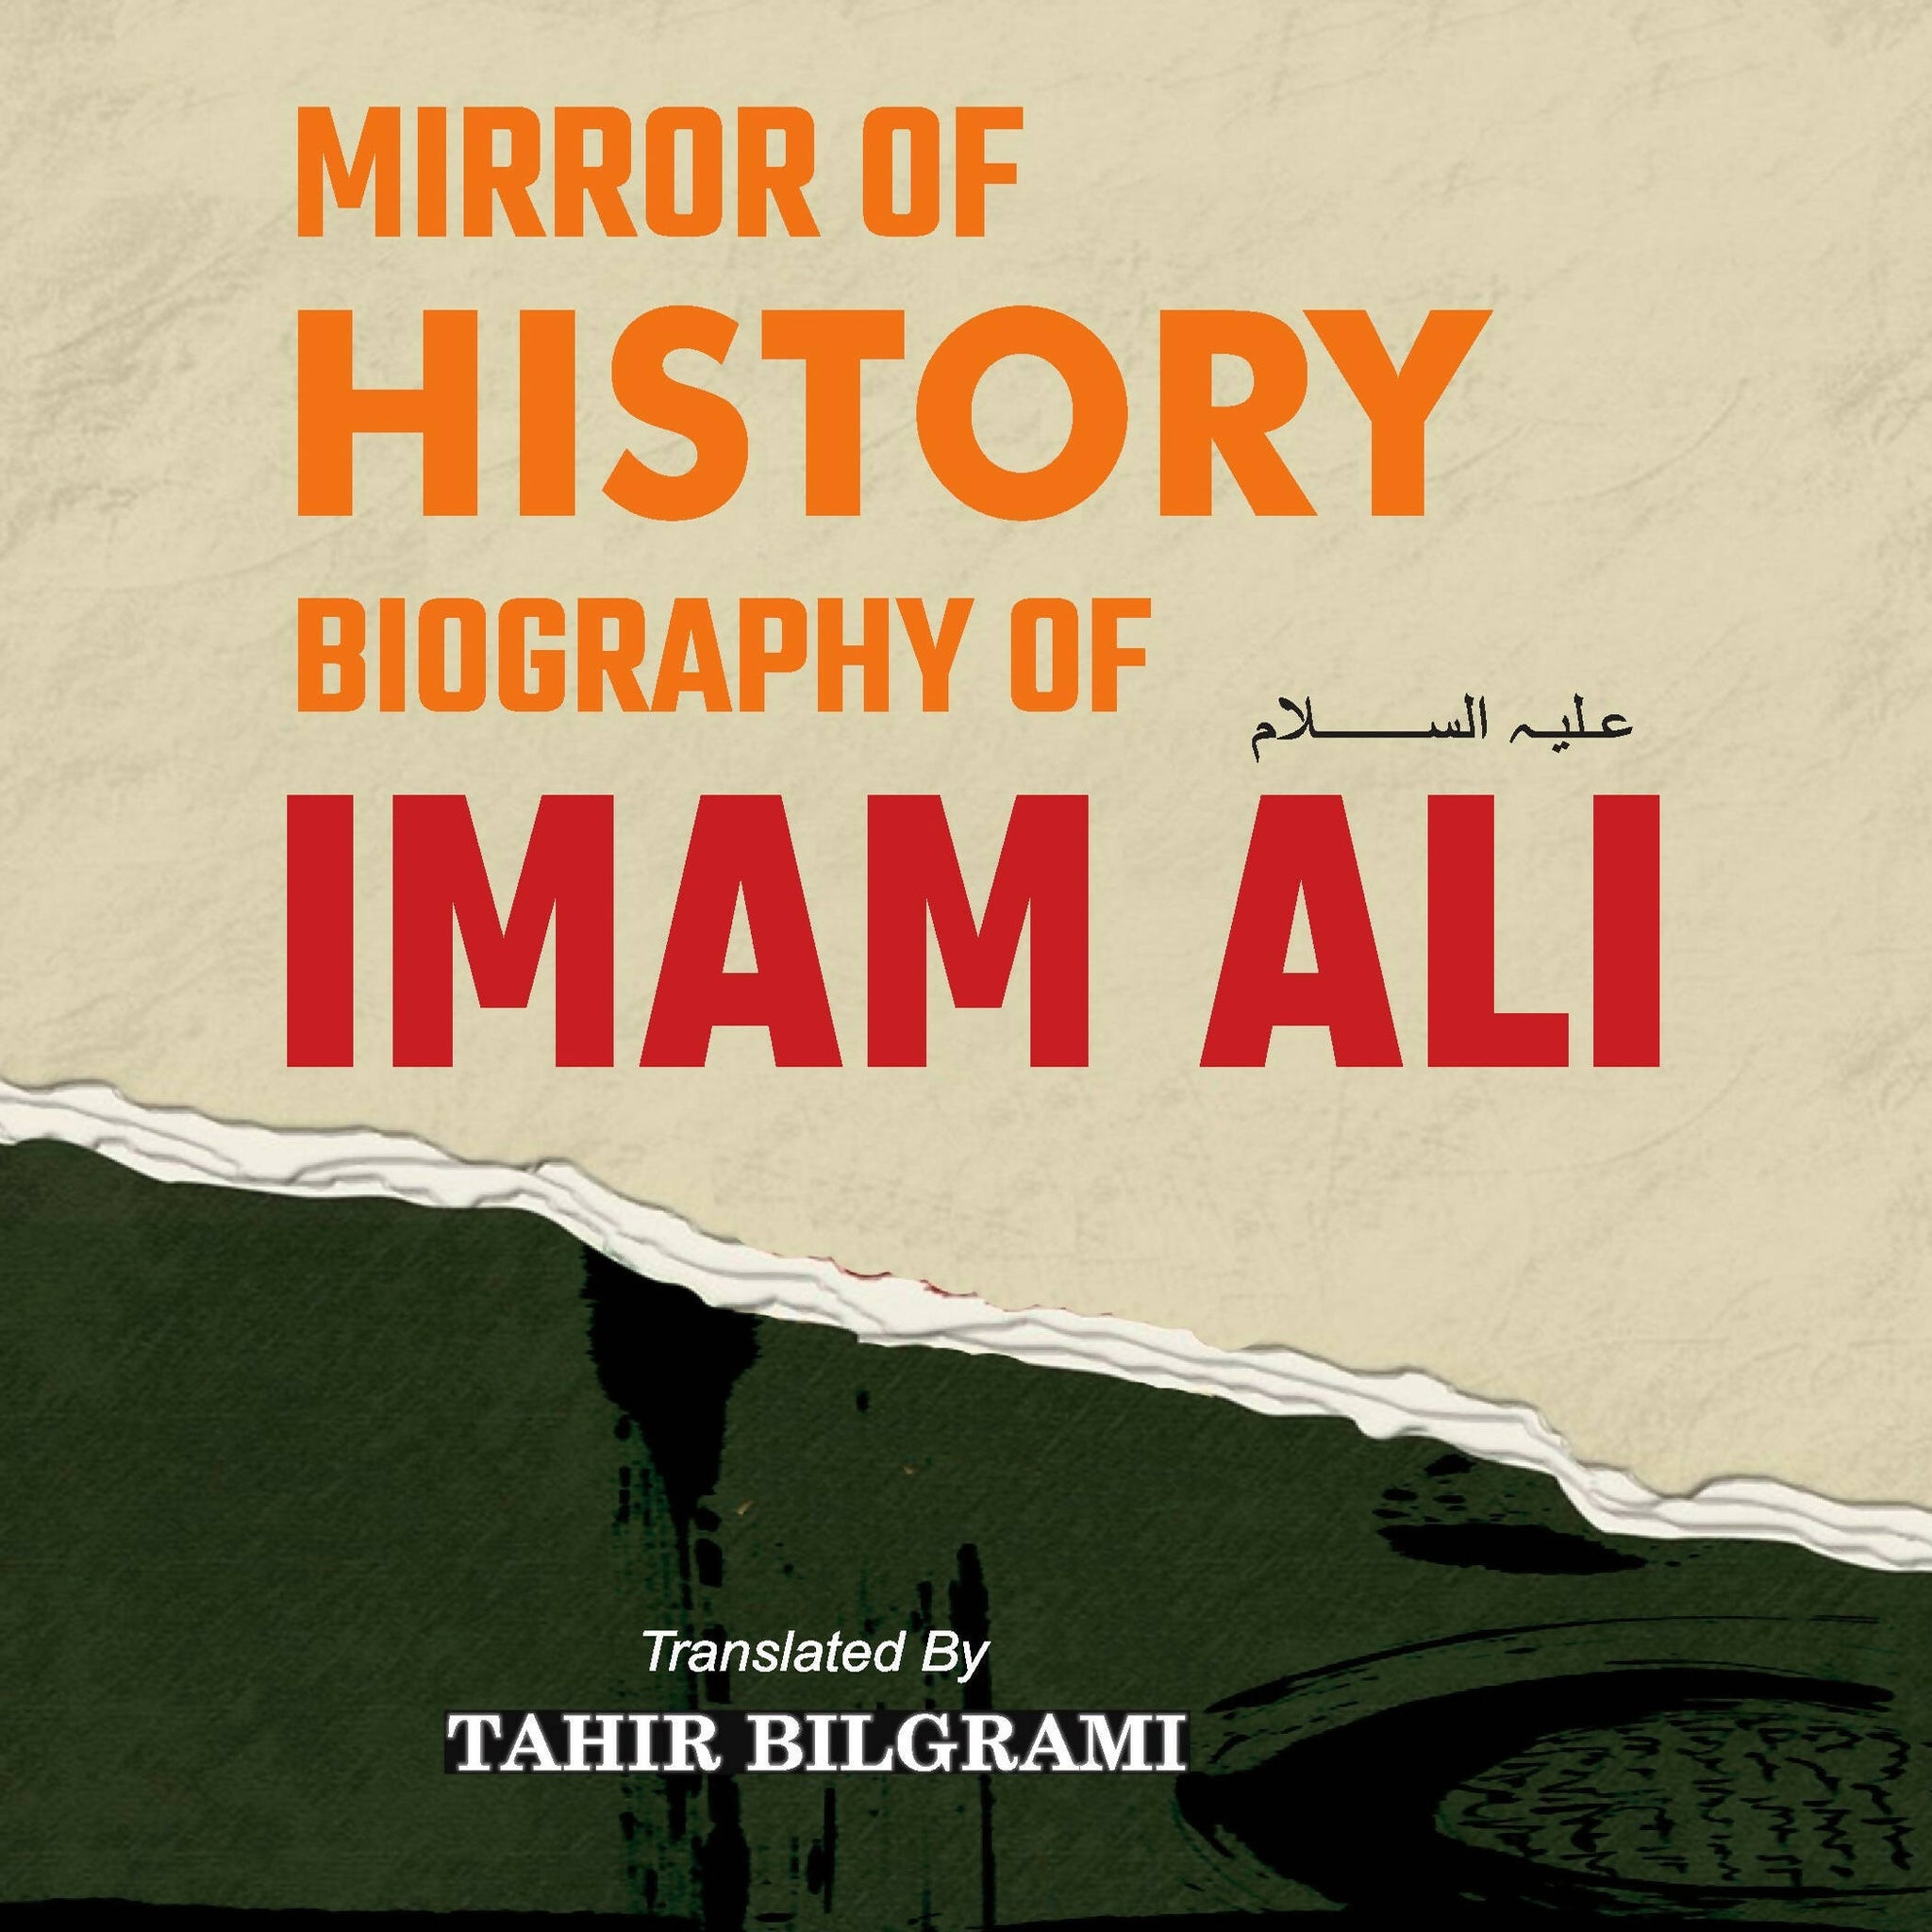 Mirror of history (Biography of Imam Ali)